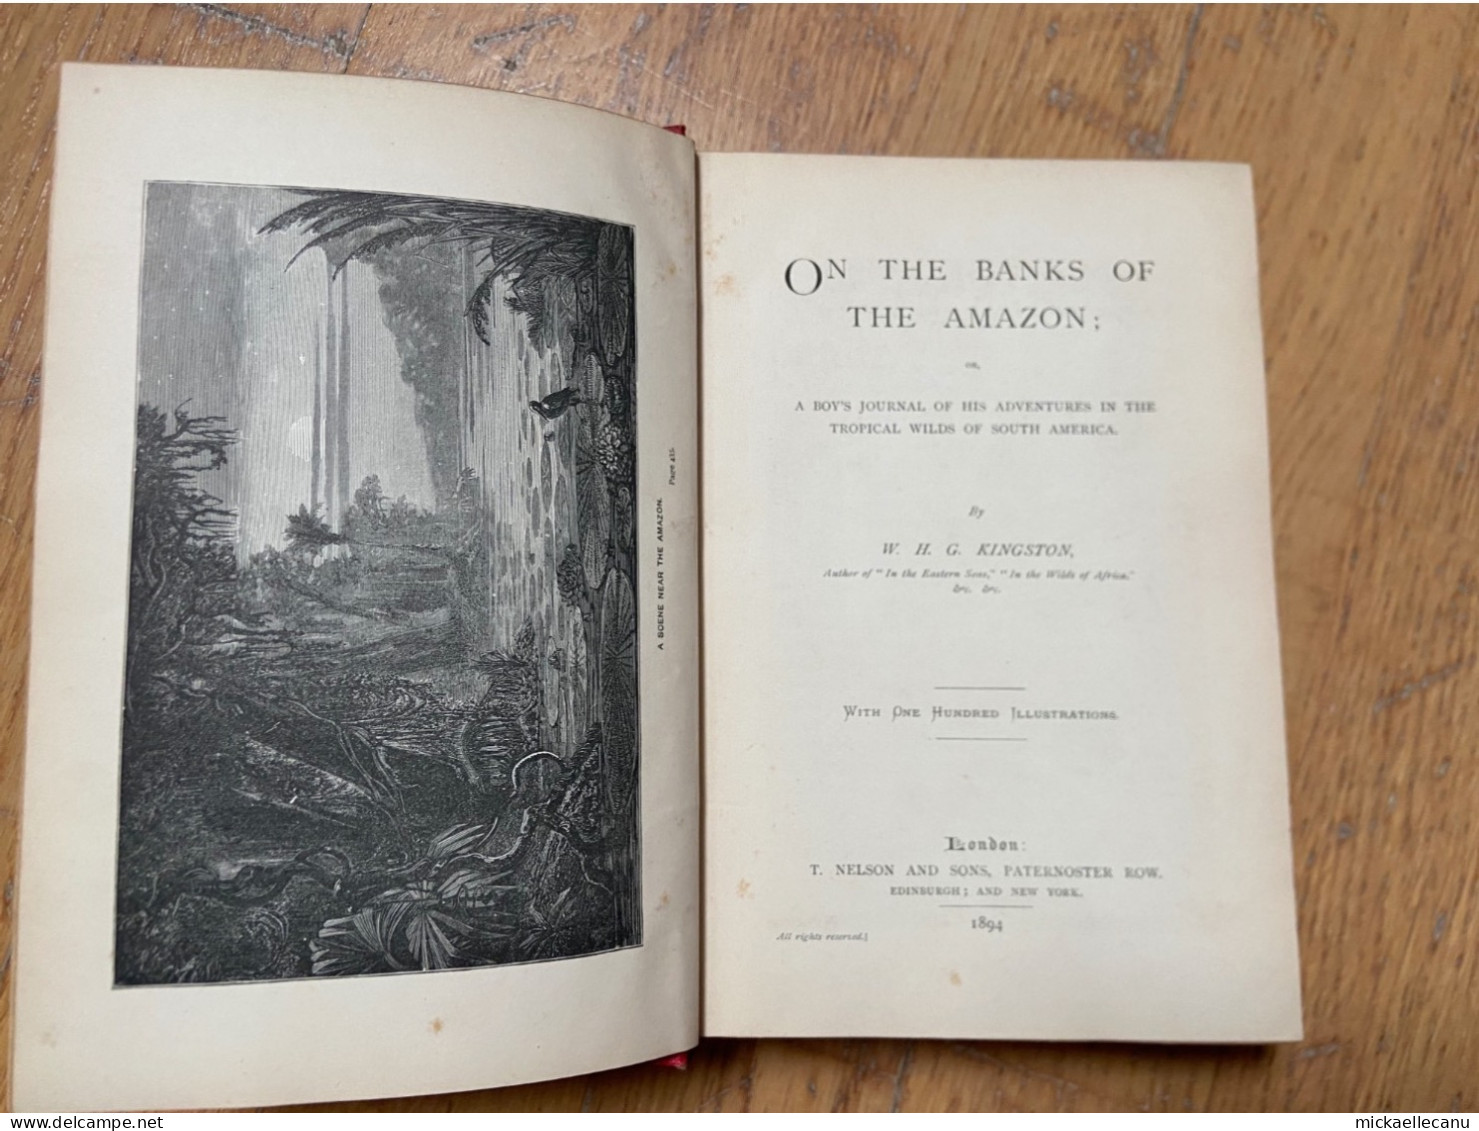 On the banks of the Amazon - W. H. G. Kingston - 1894  - livre en anglais